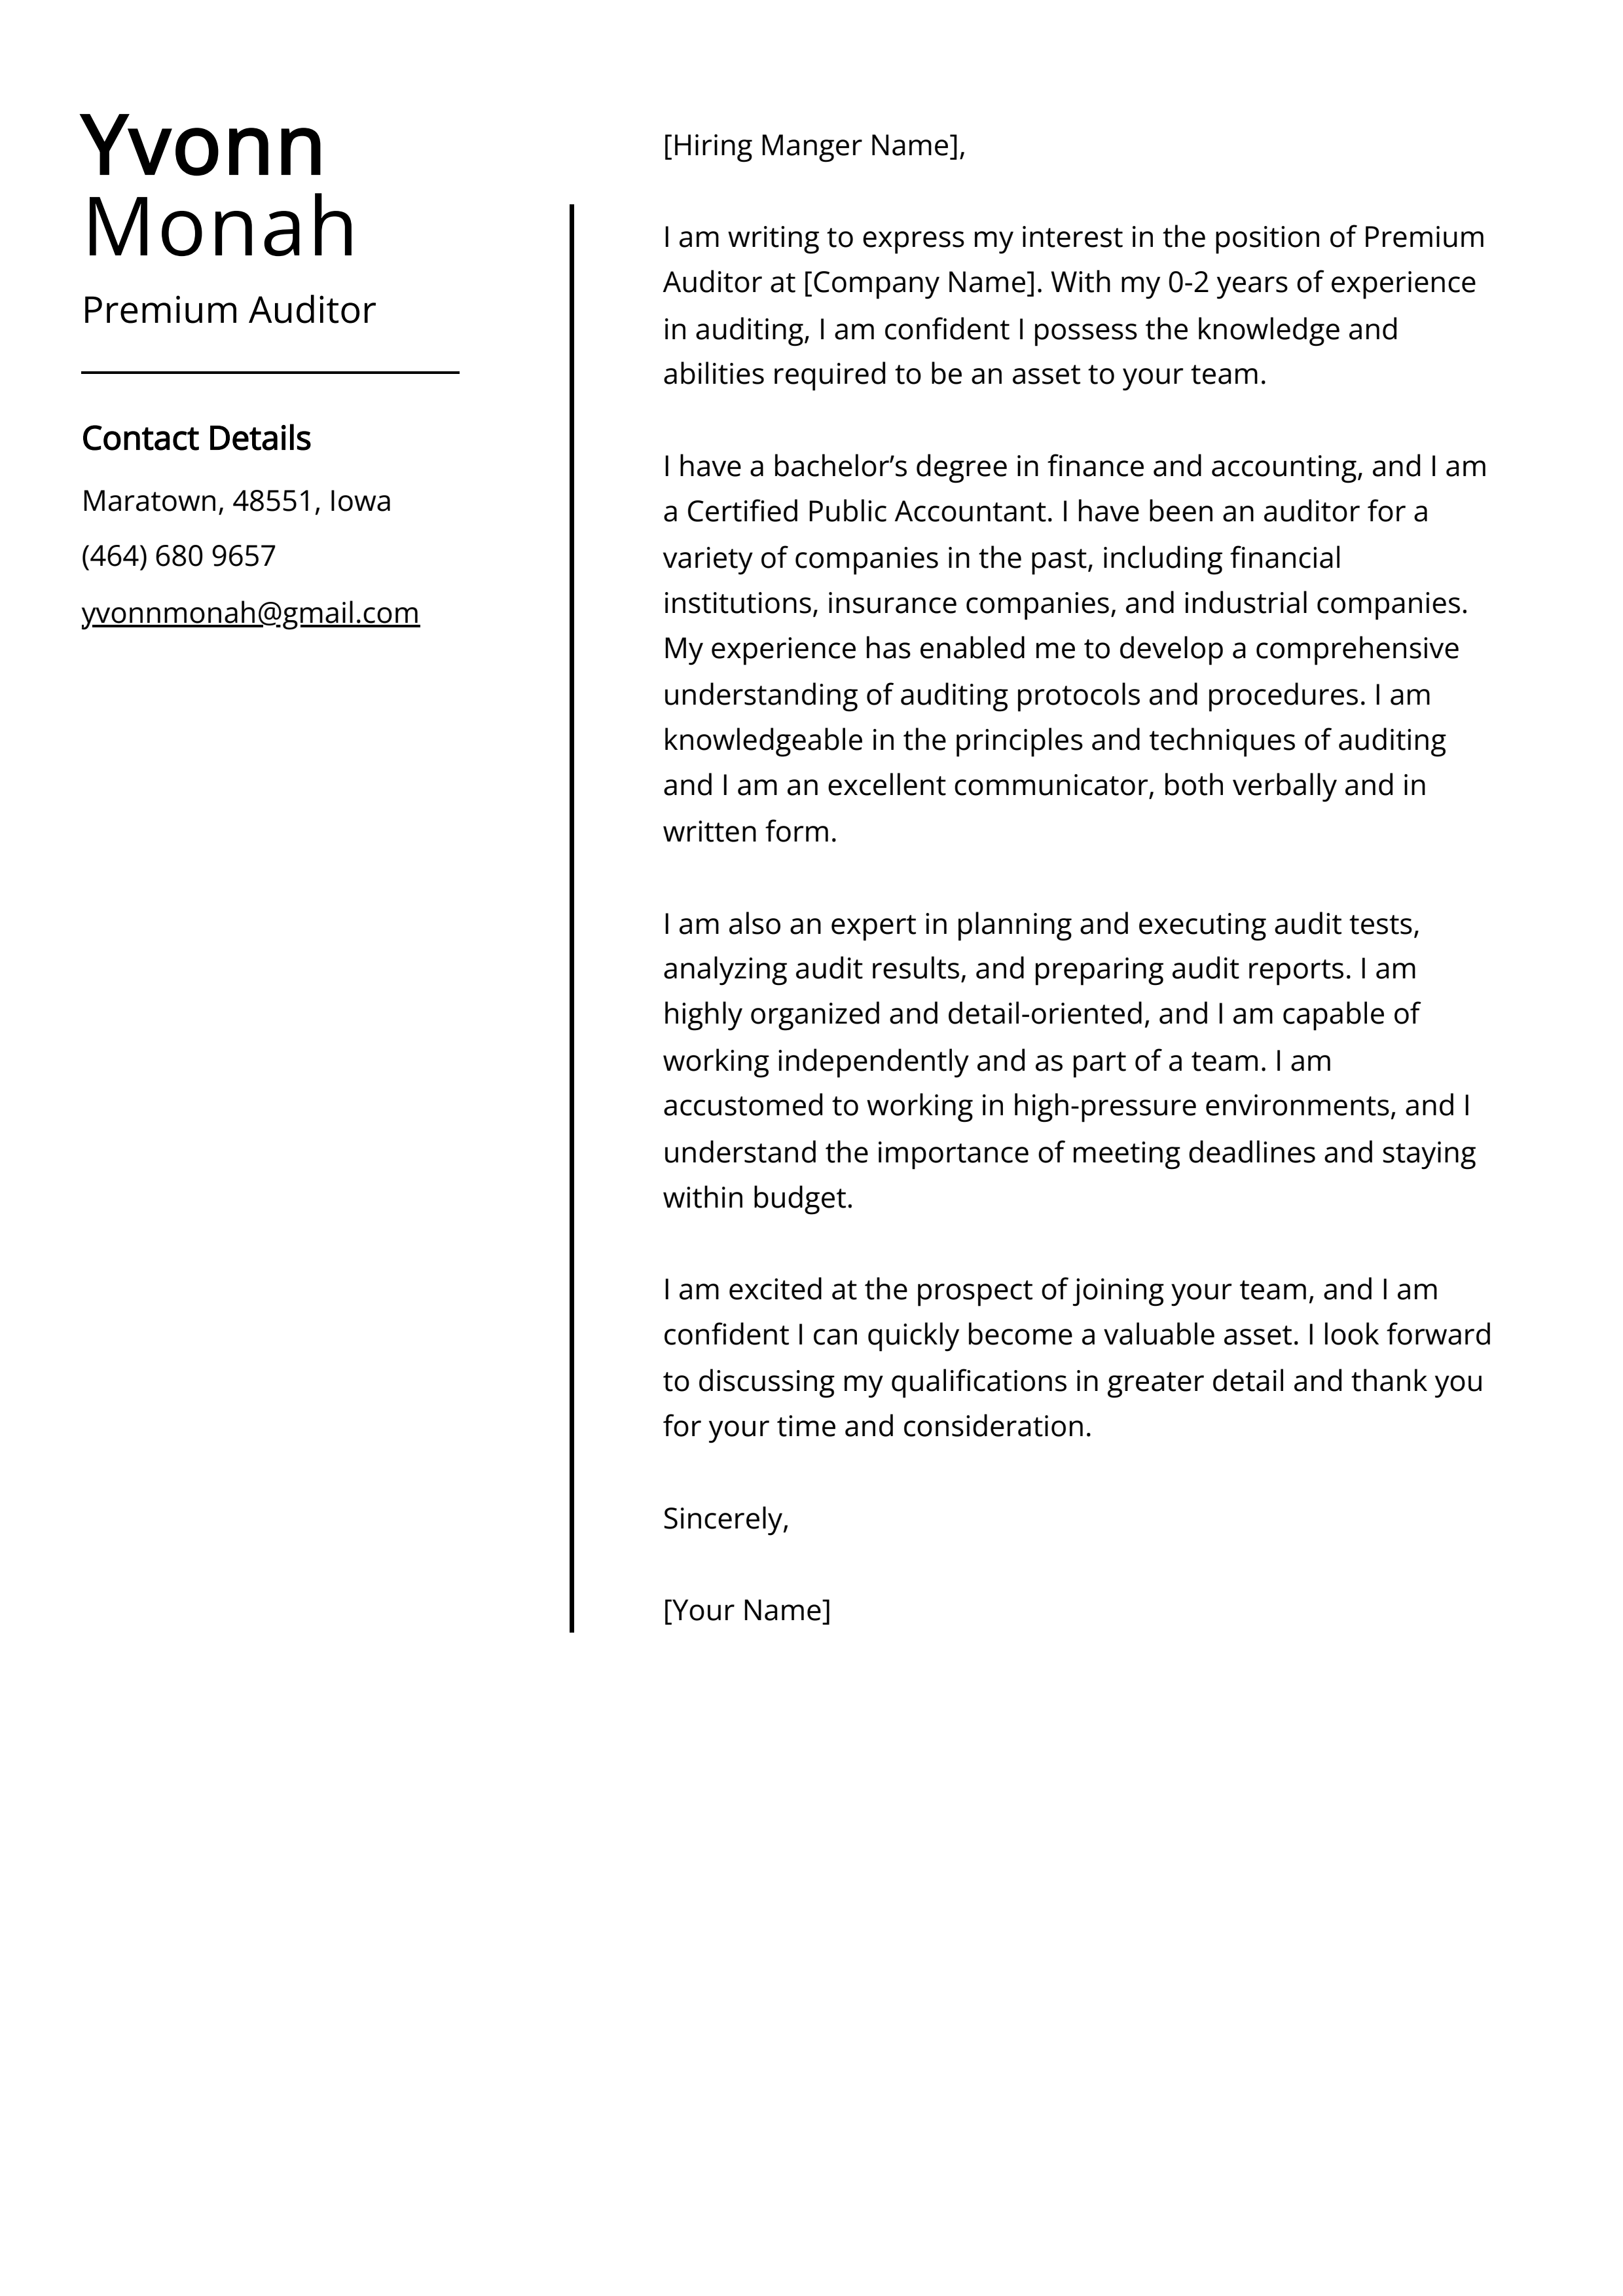 Premium Auditor Cover Letter Example